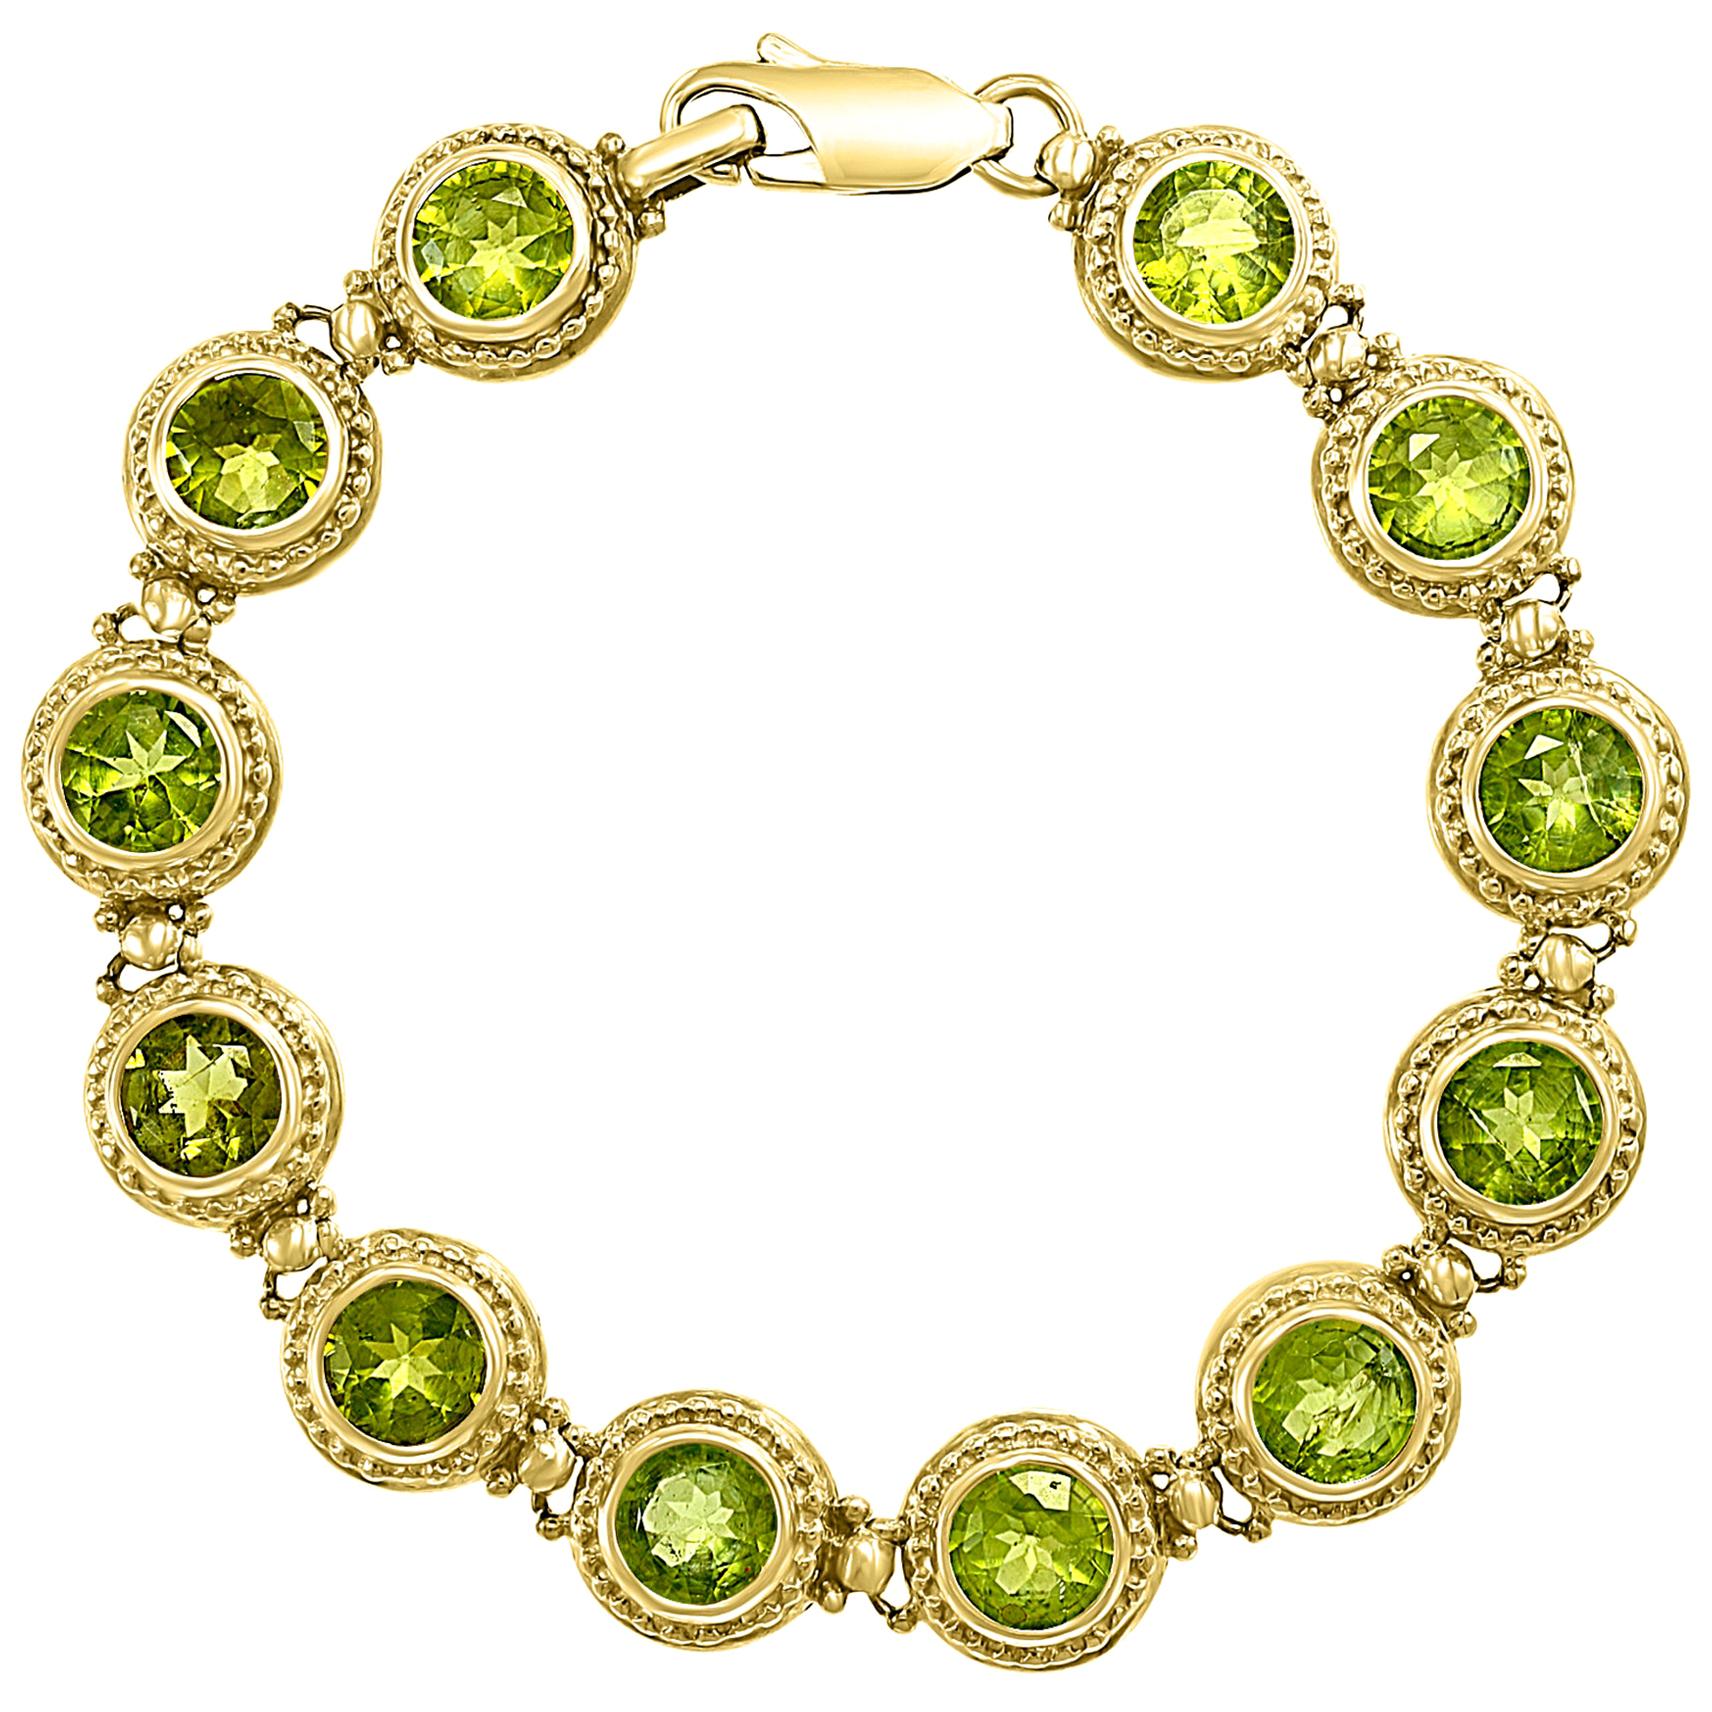 Bracelet tennis en or jaune 14 carats avec péridot naturel véritable de 16 carats, 16 grammes